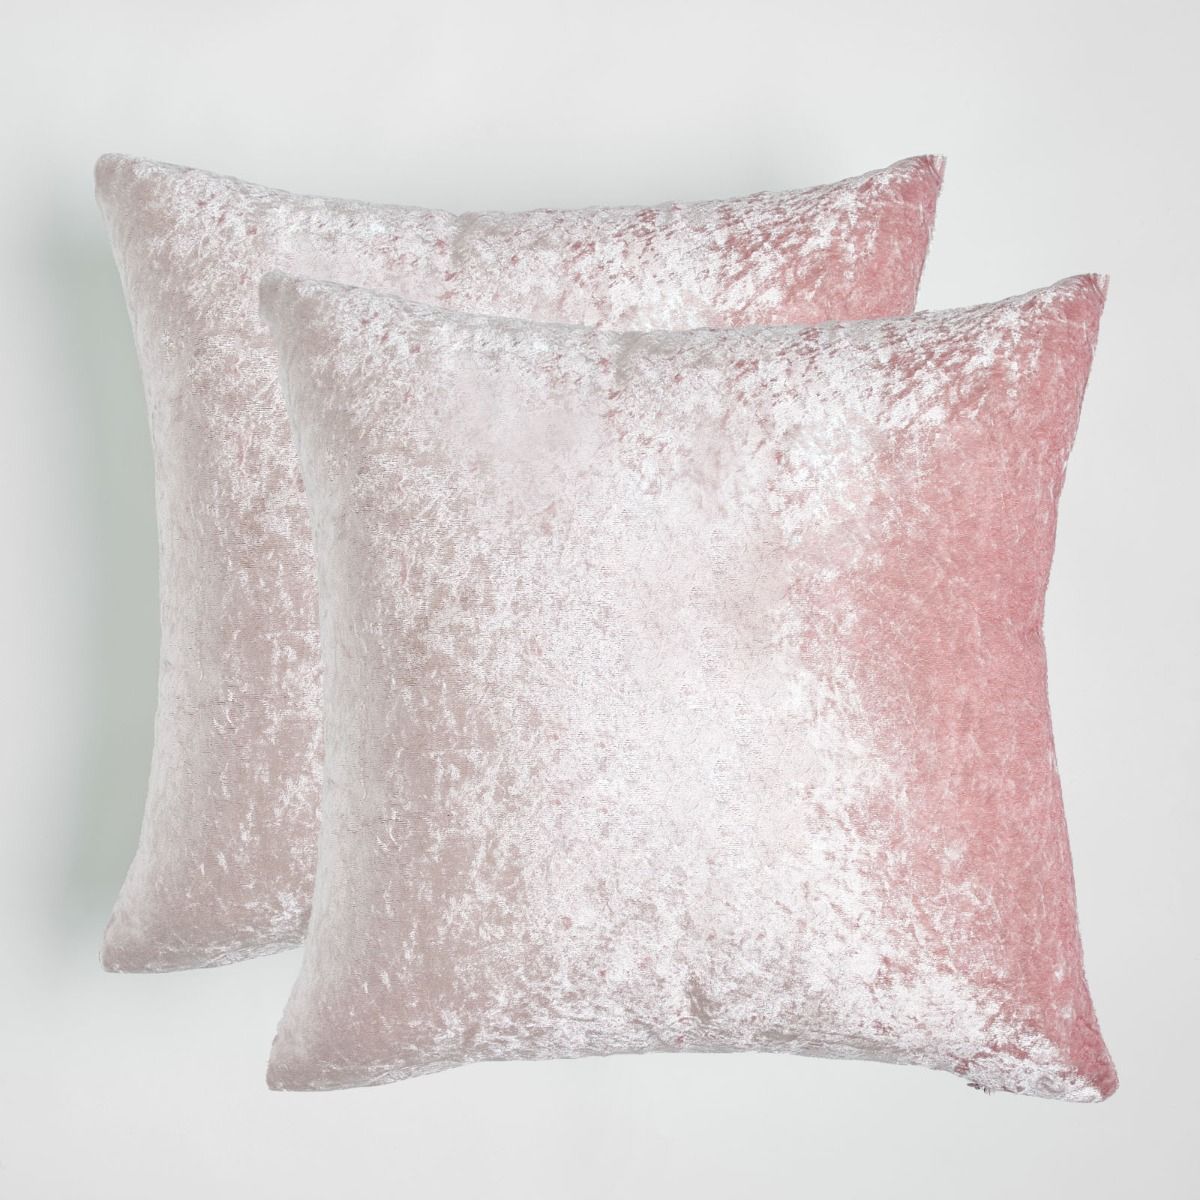 Sienna Crushed Velvet 2 Pack Cushion Covers - Blush